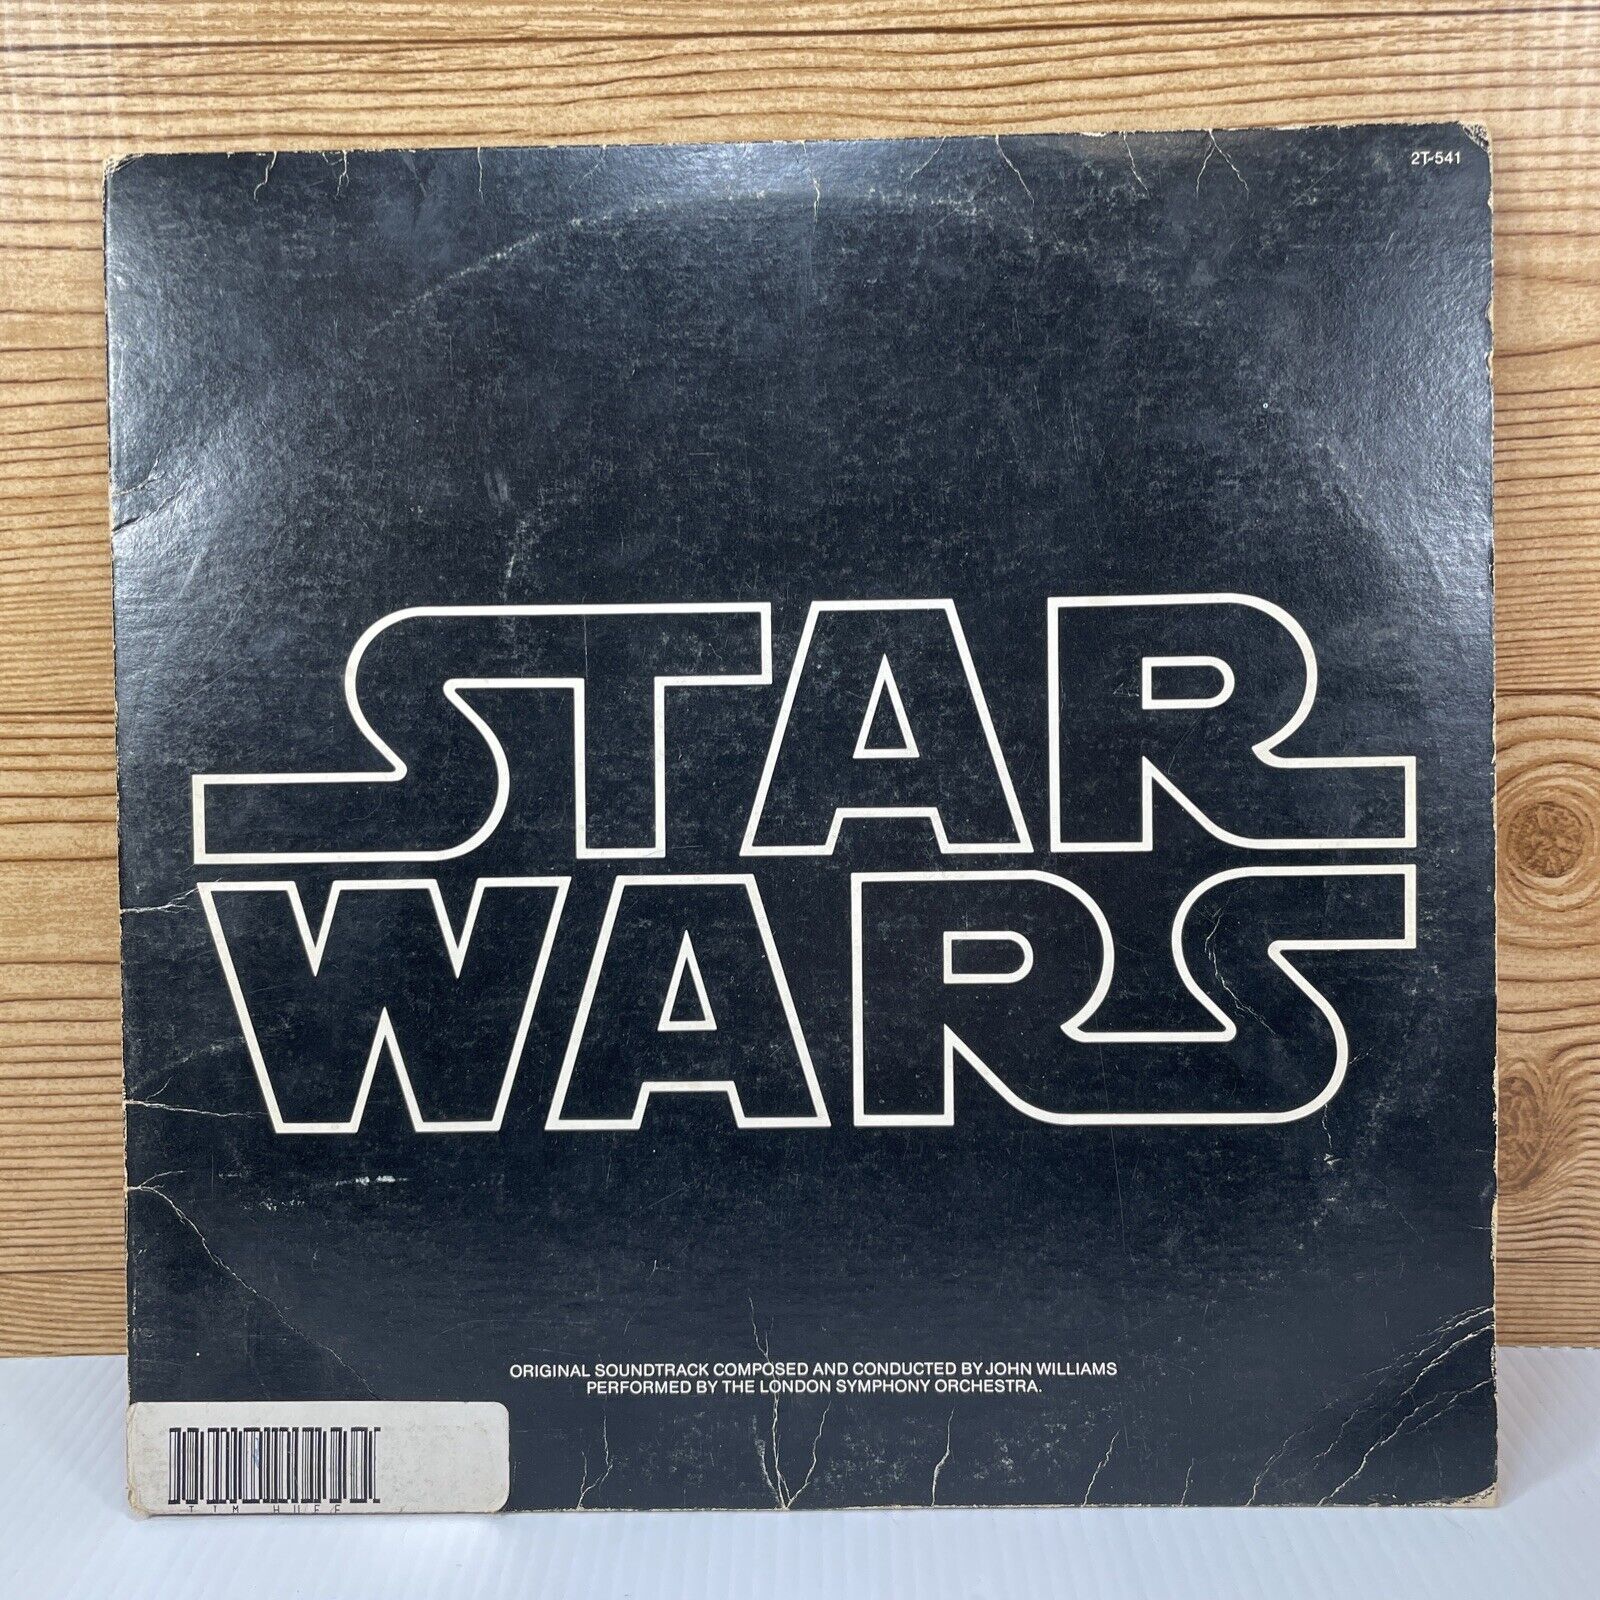 STAR WARS Soundtrack Double Vinyl LP Record Album 1977 Film Vtg Original 2T541